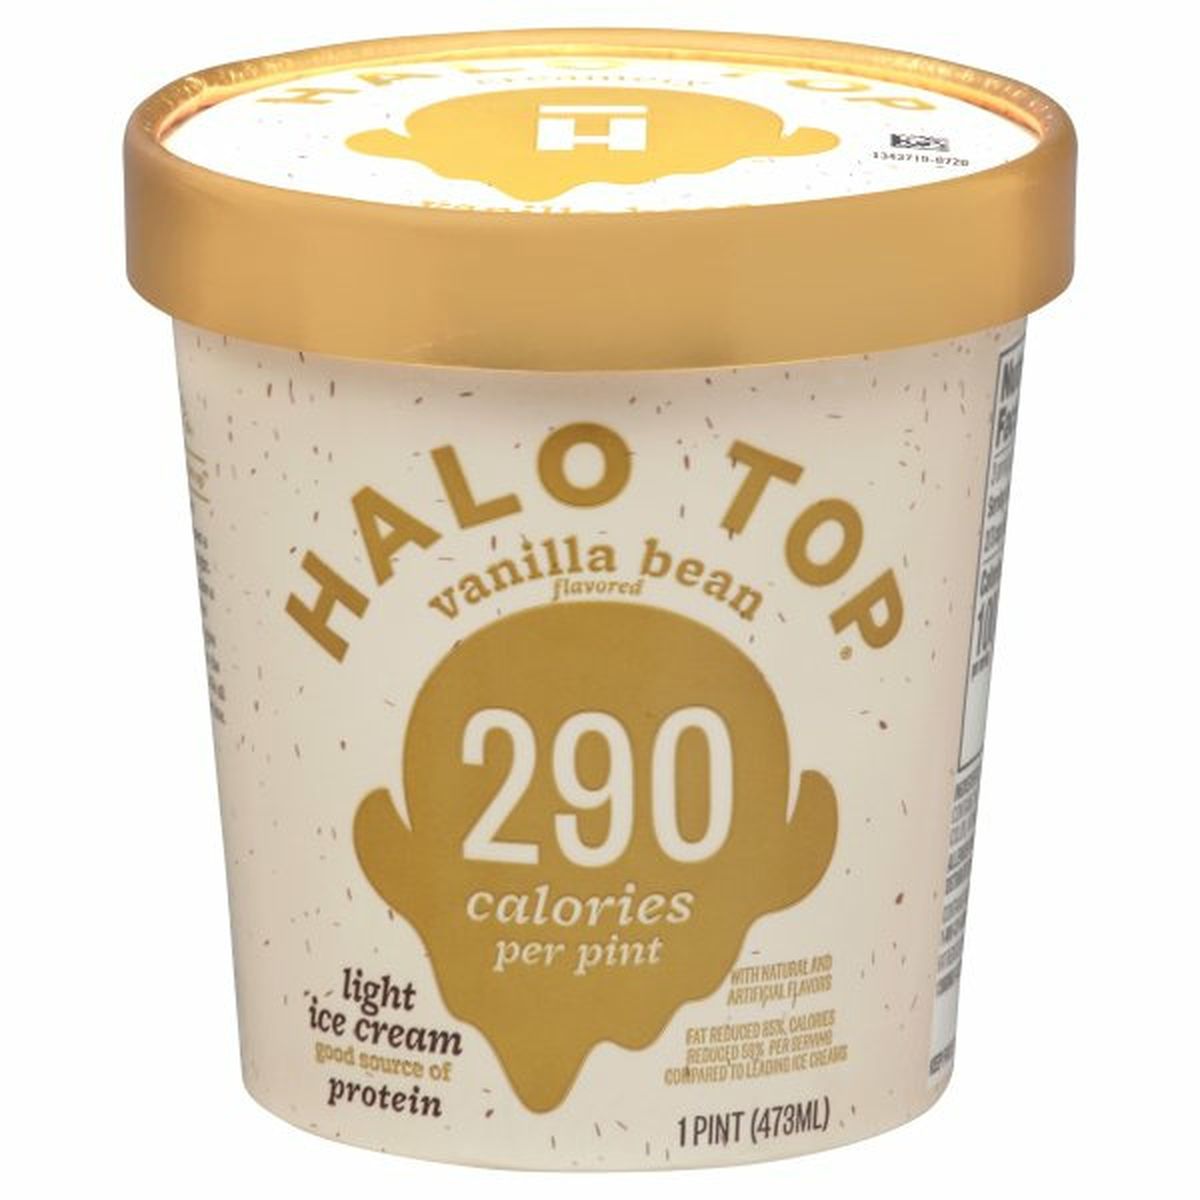 Calories in Halo Top Ice Cream, Vanilla Bean Flavored, Light